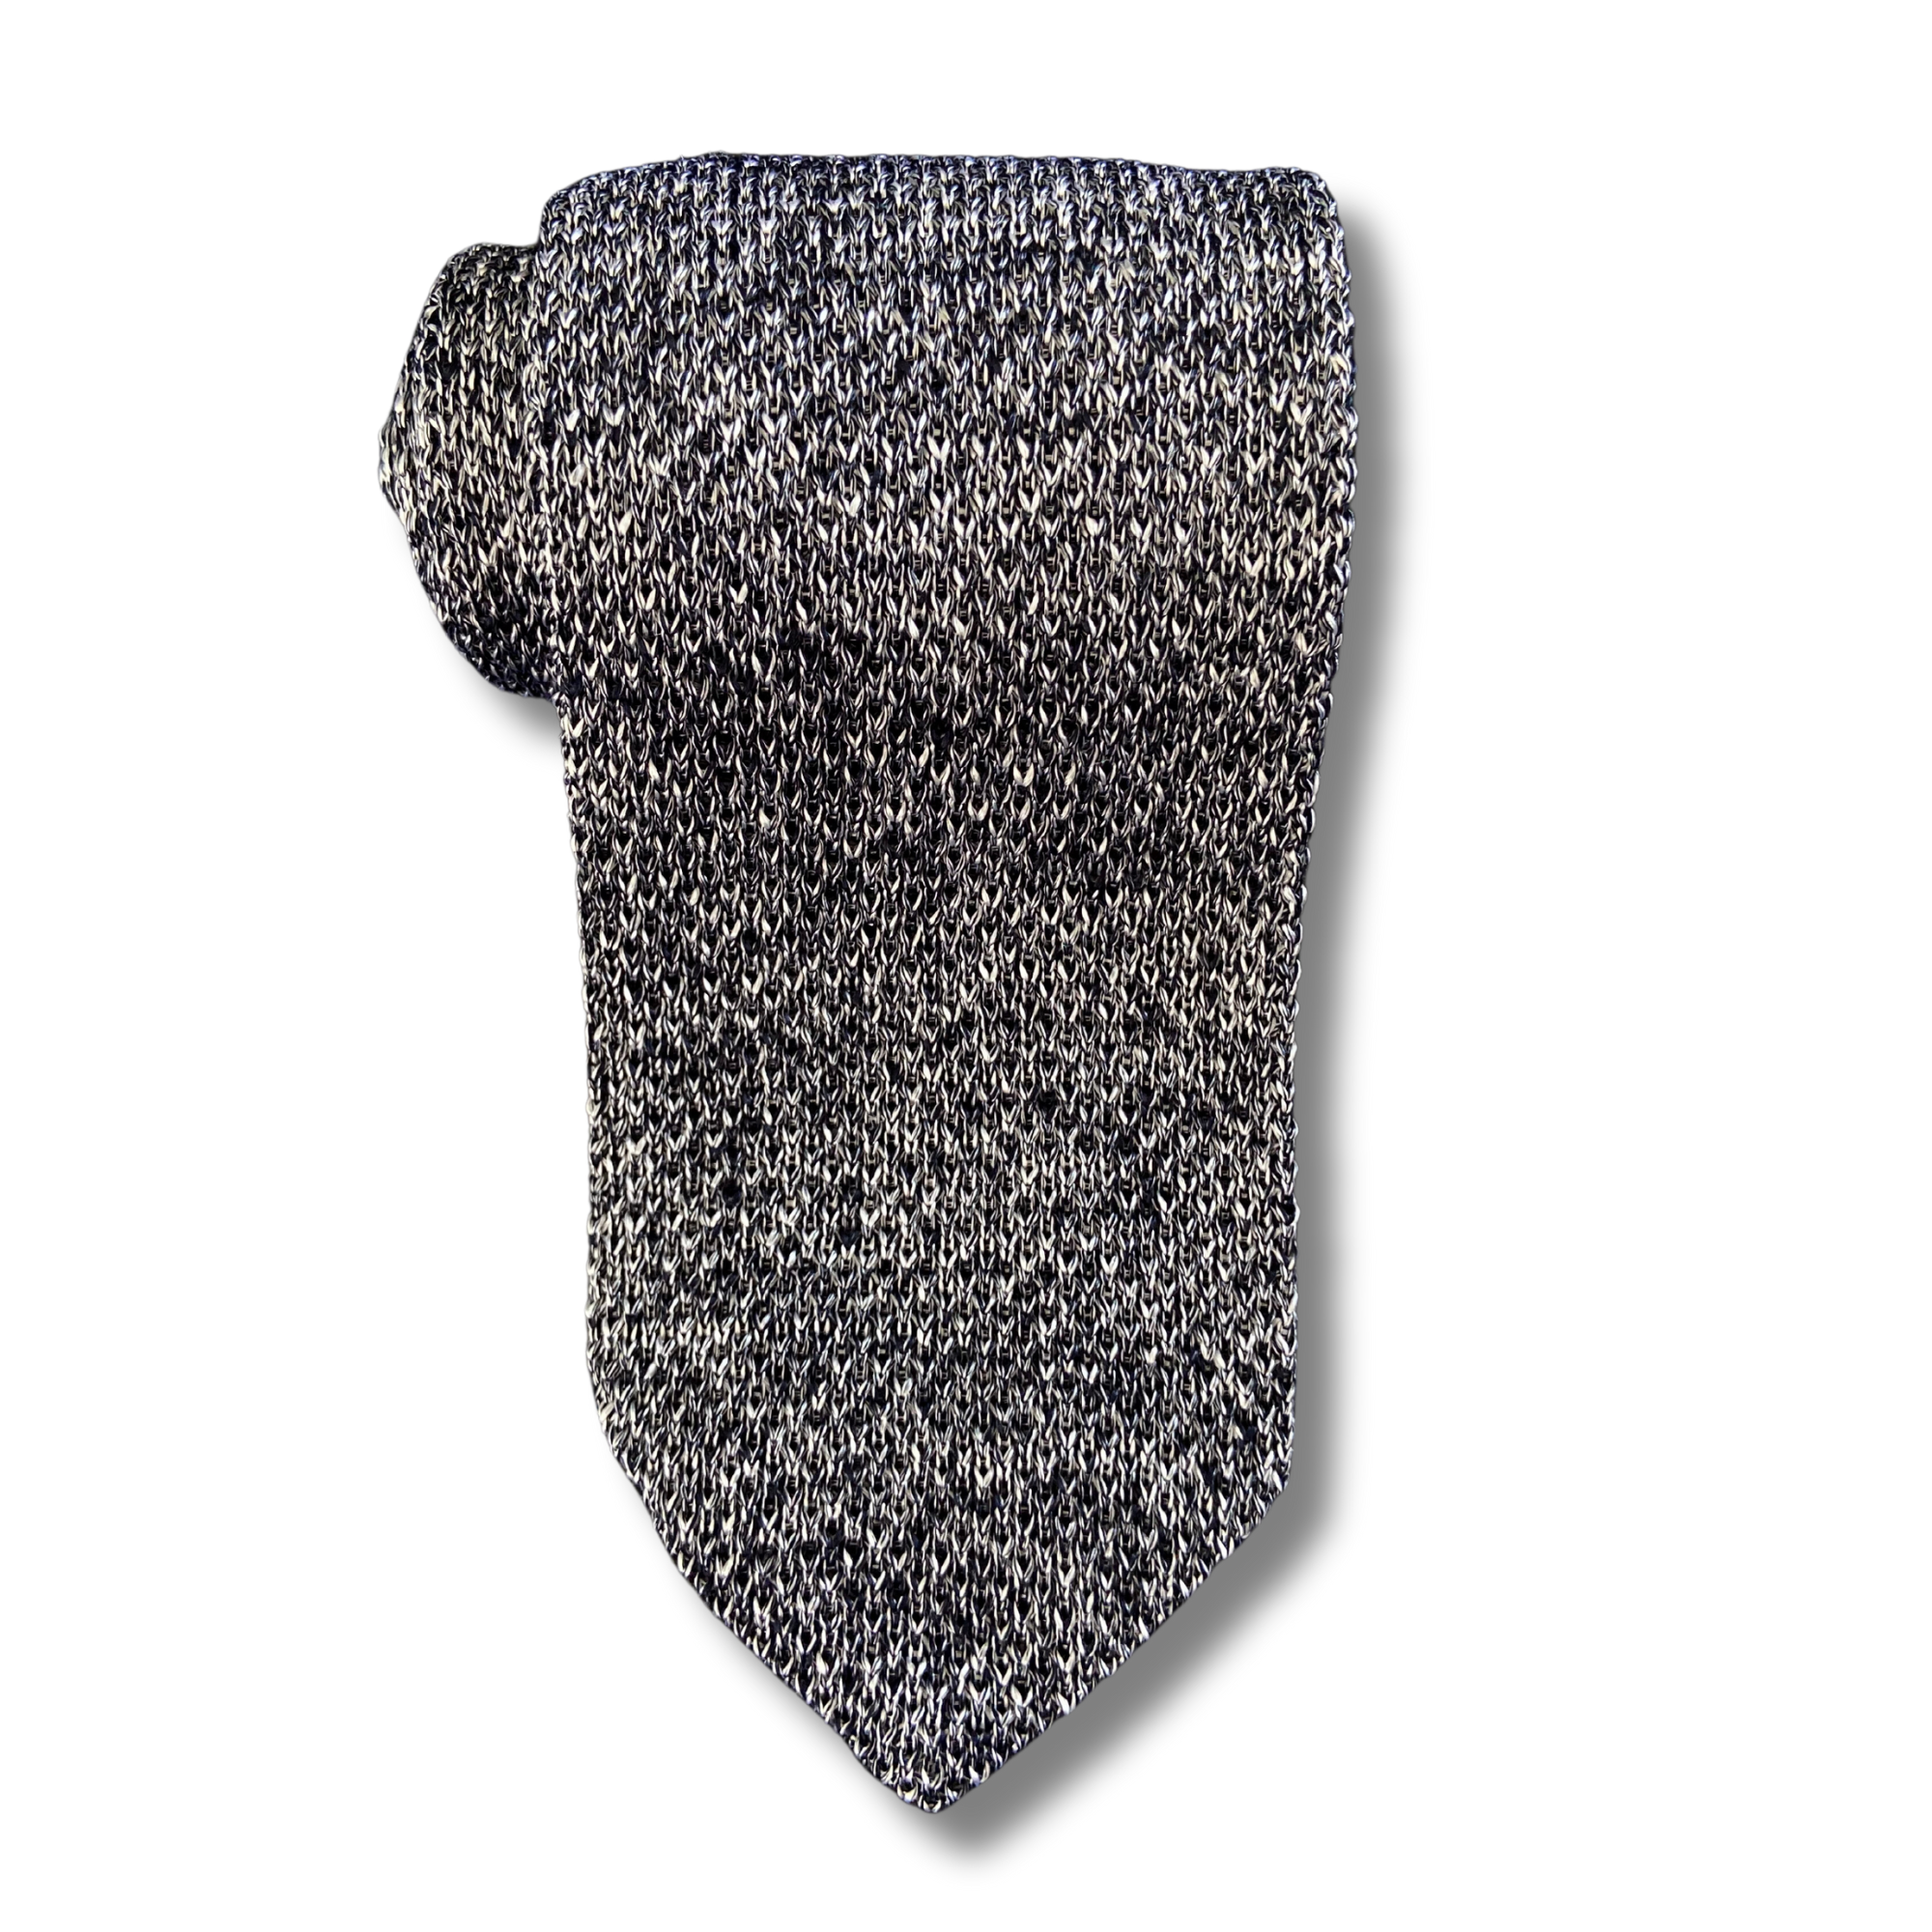 Black and White Melange Knit Tie